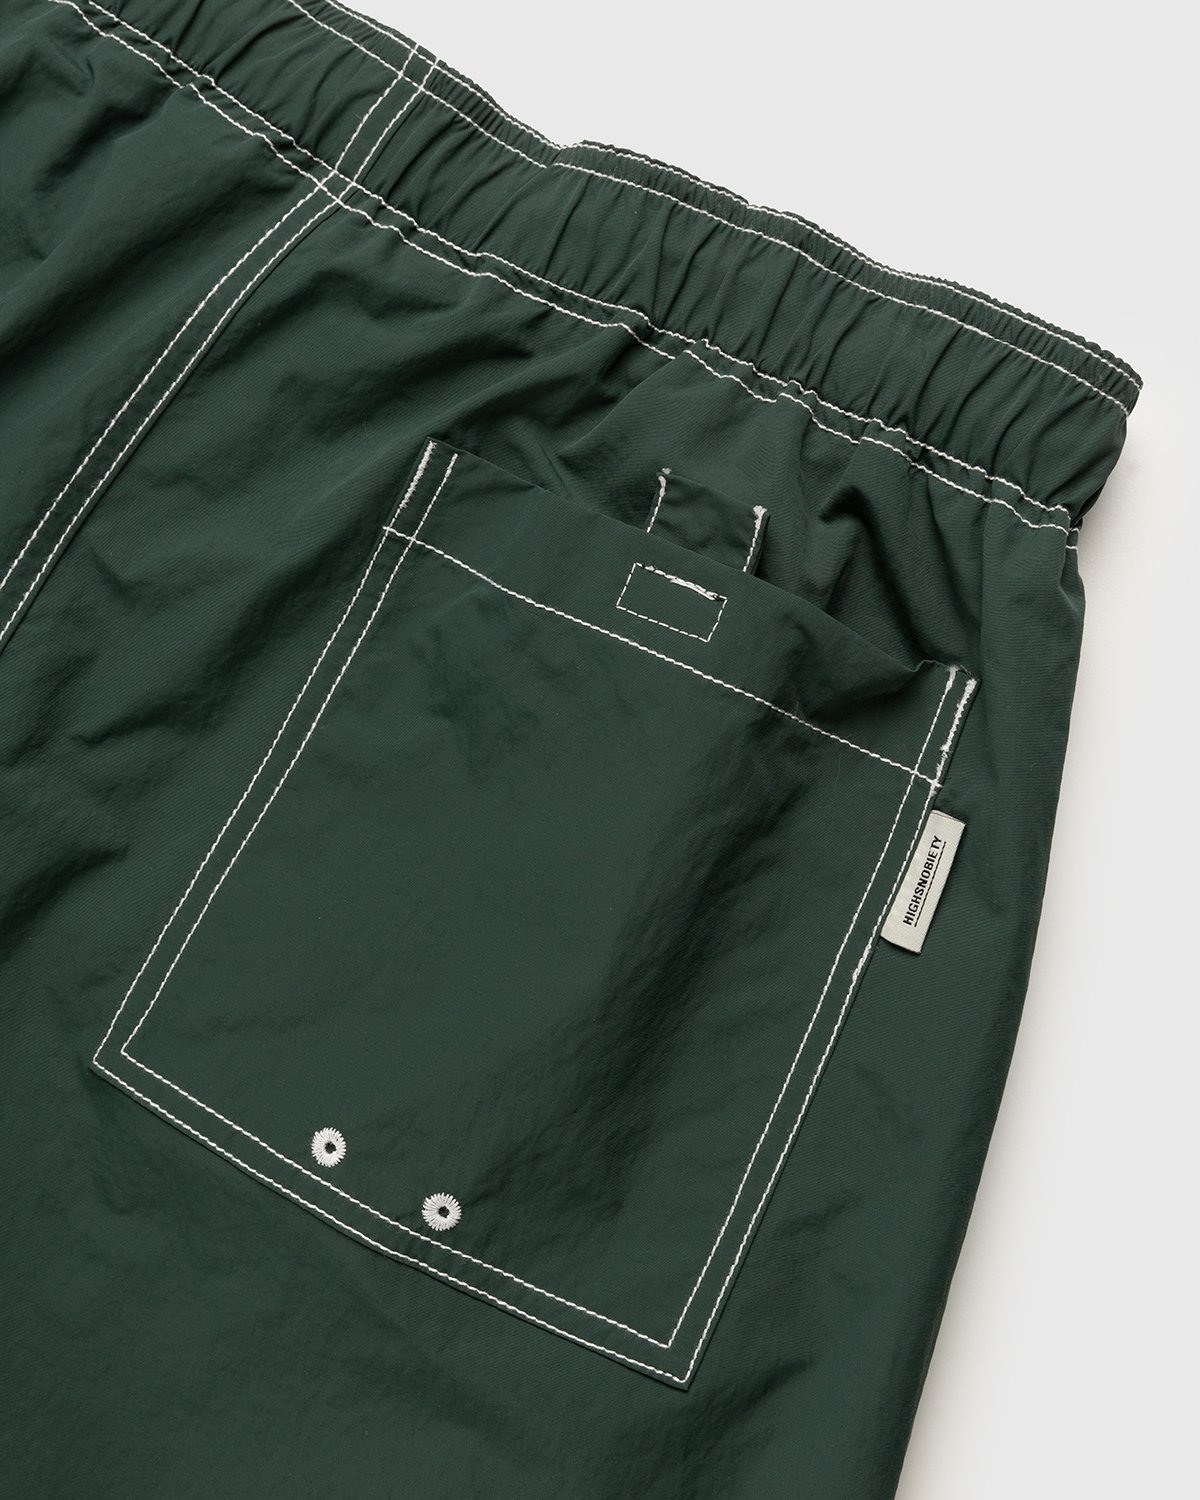 Highsnobiety - Contrast Brushed Nylon Water Shorts Green - Clothing - Green - Image 4